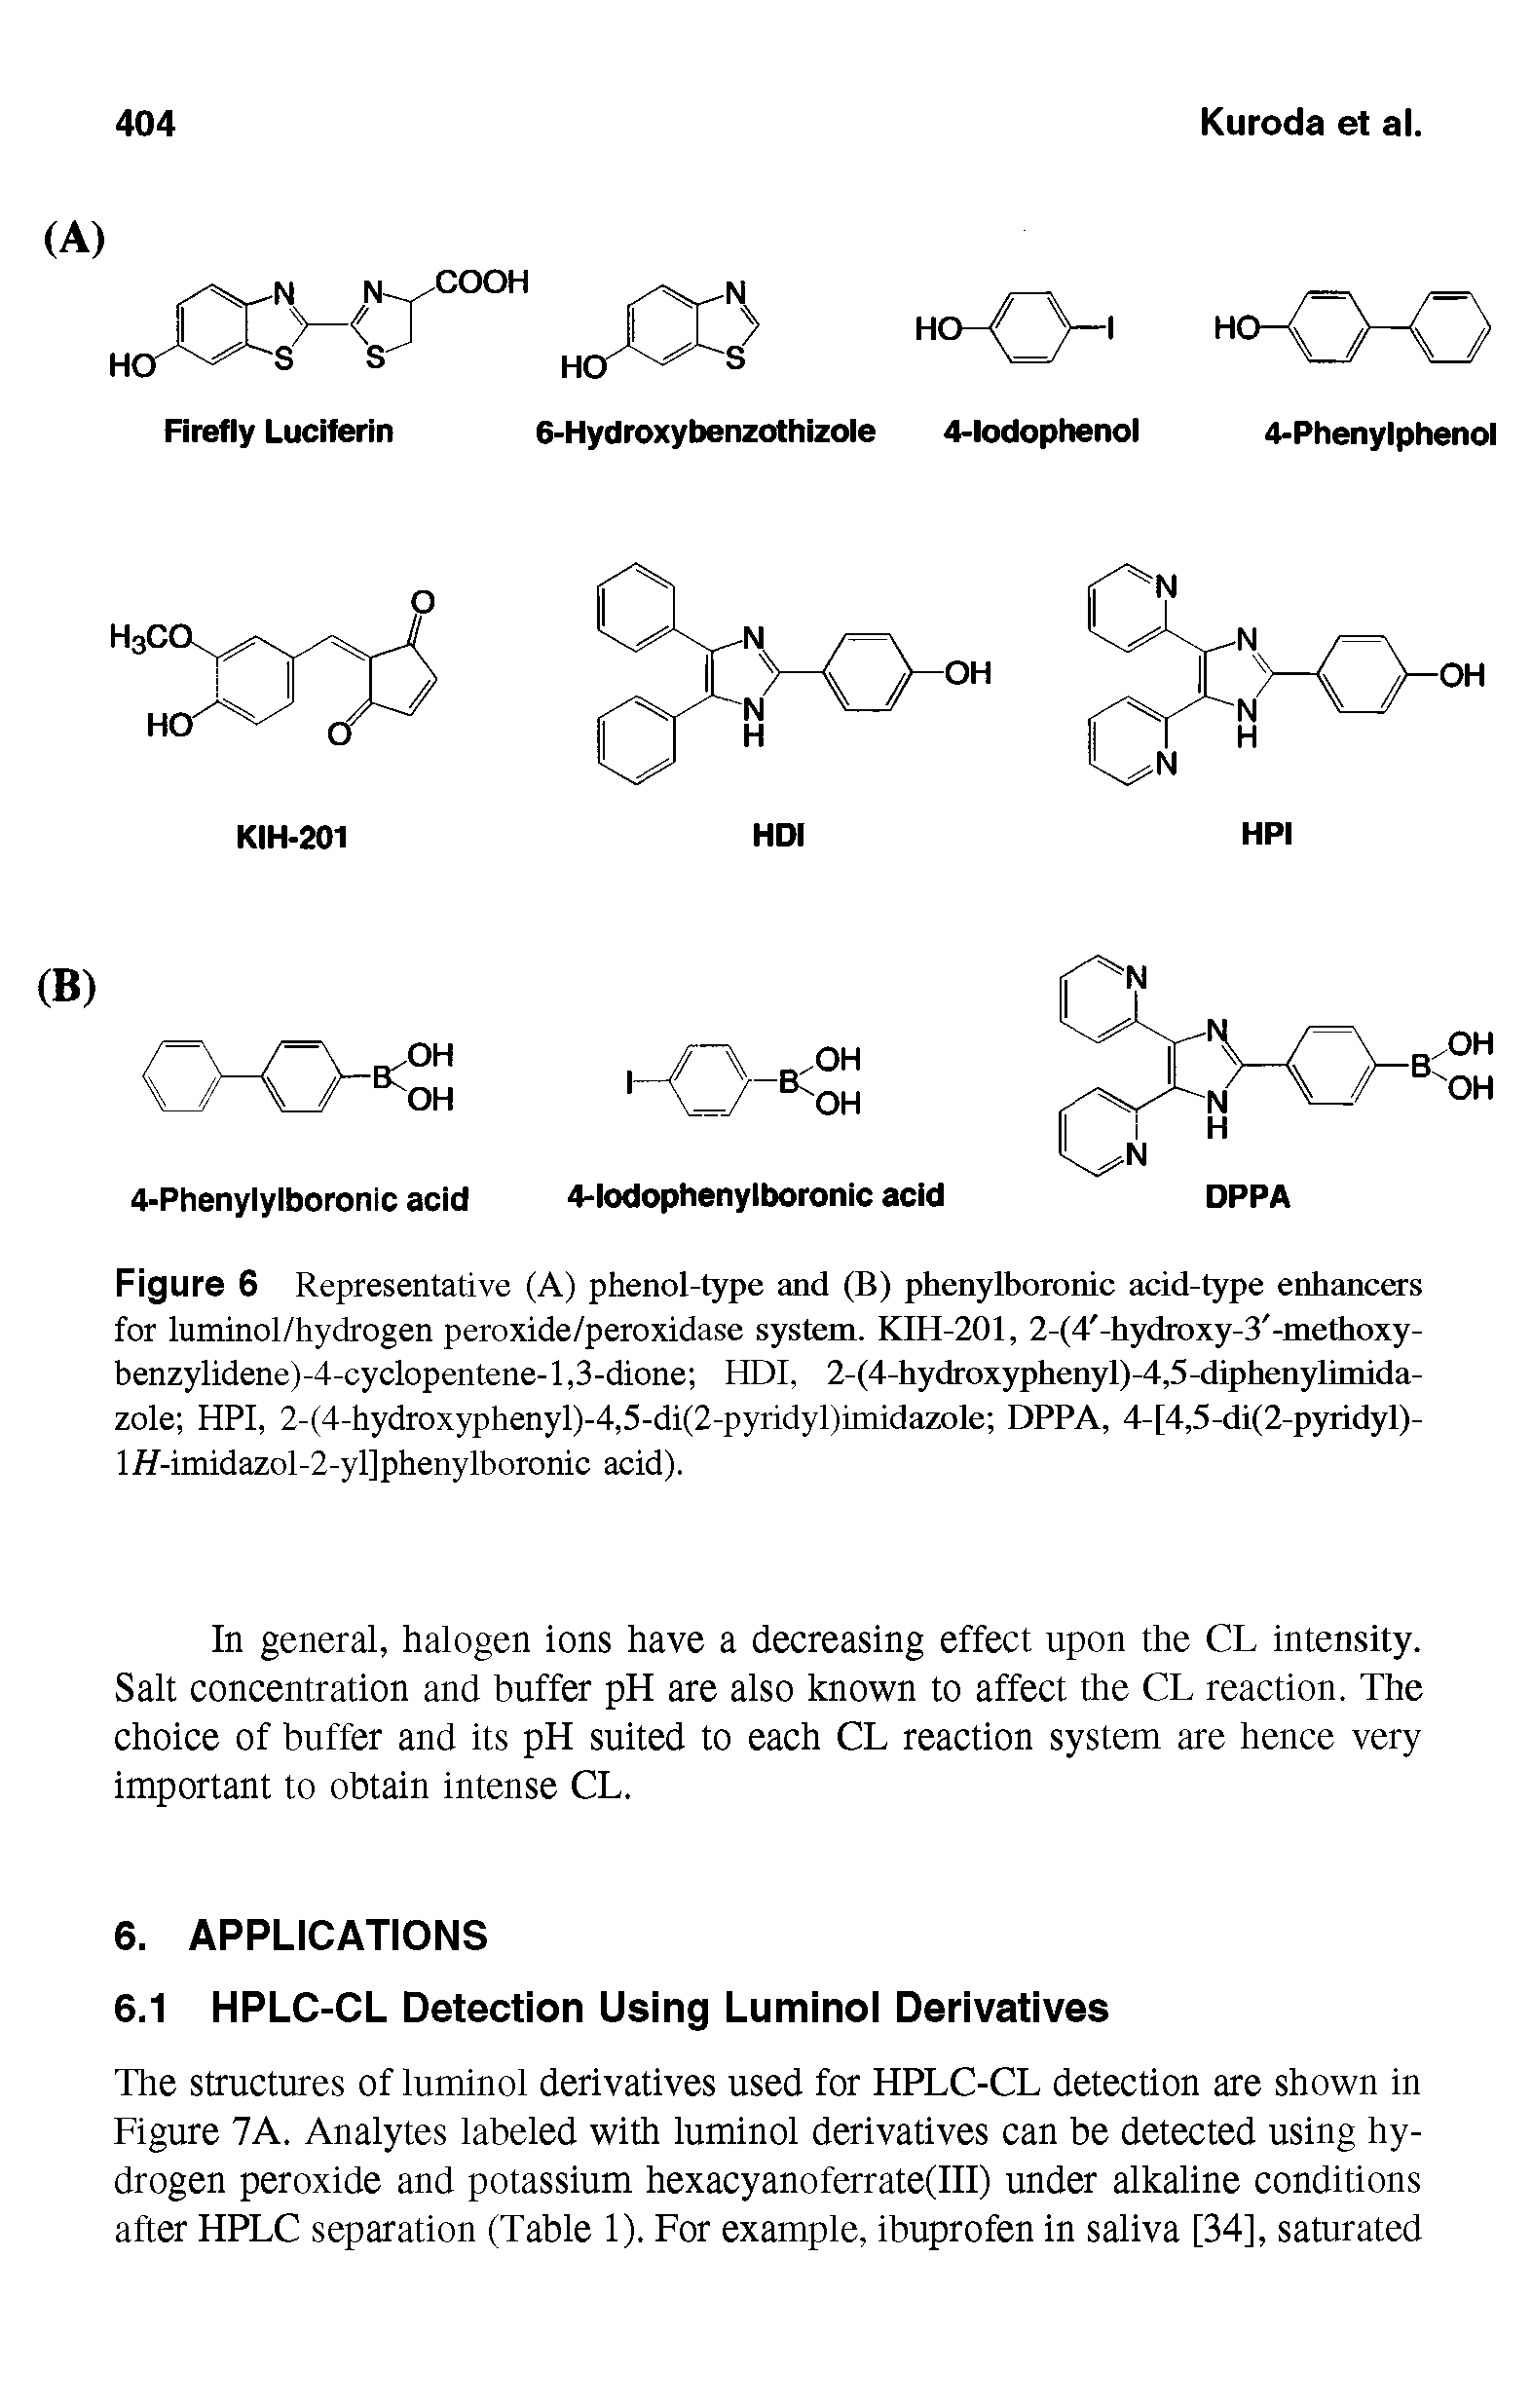 Figure 6 Representative (A) phenol-type and (B) phenylboronic acid-type enhancers for luminol/hydrogen peroxide/peroxidase system. KIH-201, 2-(4 -hydroxy-3 -methoxy-benzylidene)-4-cyclopentene-1,3-dione HDI, 2-(4-hydroxyphenyl)-4,5-diphenylimida-zole HPI, 2-(4-hydroxyphenyl)-4,5-di(2-pyridyl)imidazole DPPA, 4-[4,5-di(2-pyridyl)-lH-imidazol-2-yl]phenylboronic acid).